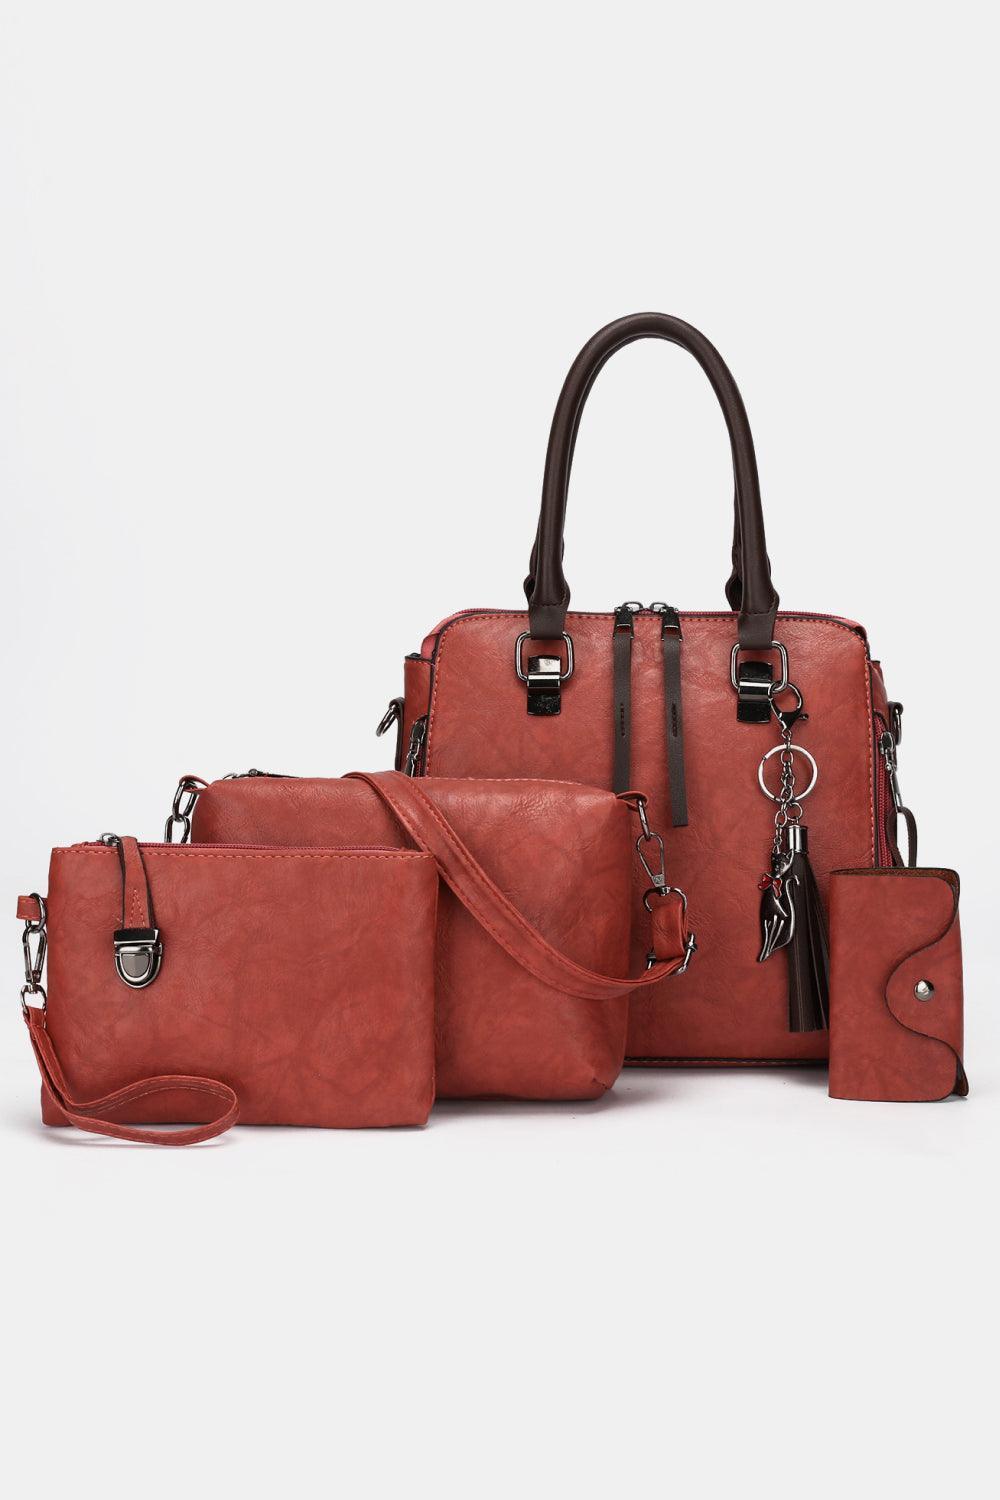 Travel Efficient 4-Piece PU Leather Women Bag Set - MXSTUDIO.COM